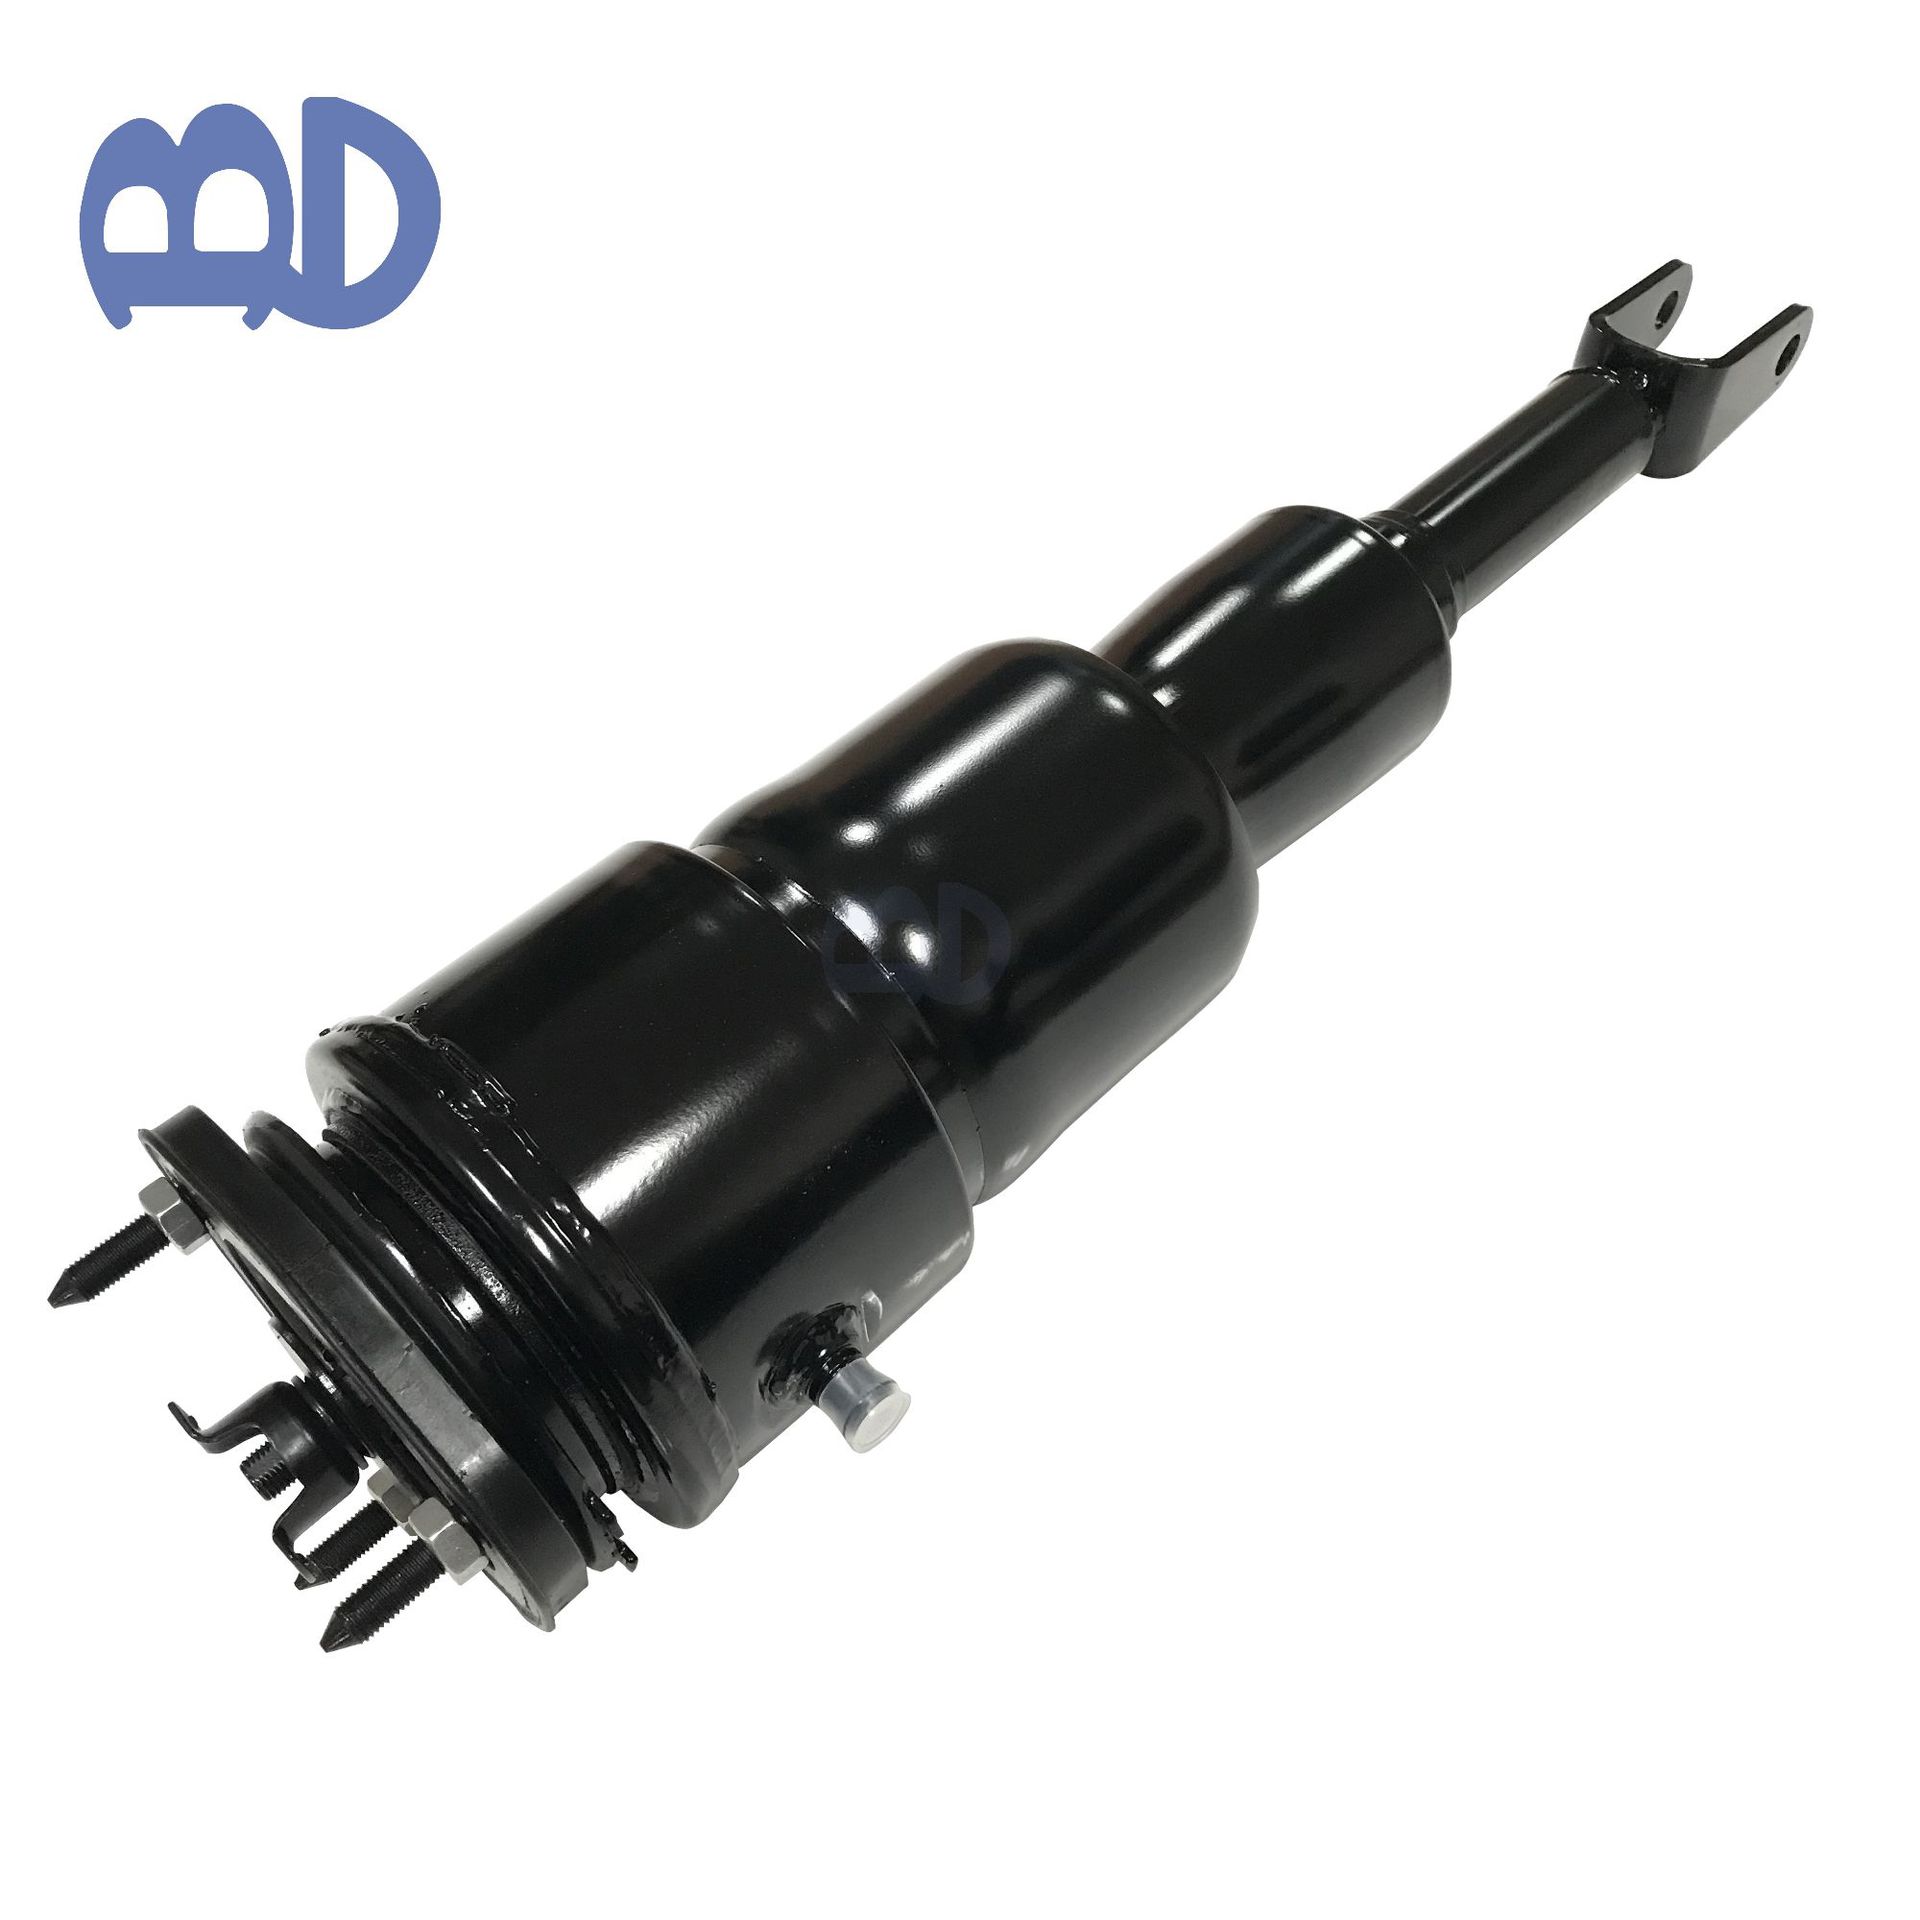 LEXUS-LS460 front air suspension shock absorber 48020-50242-48020-50240-